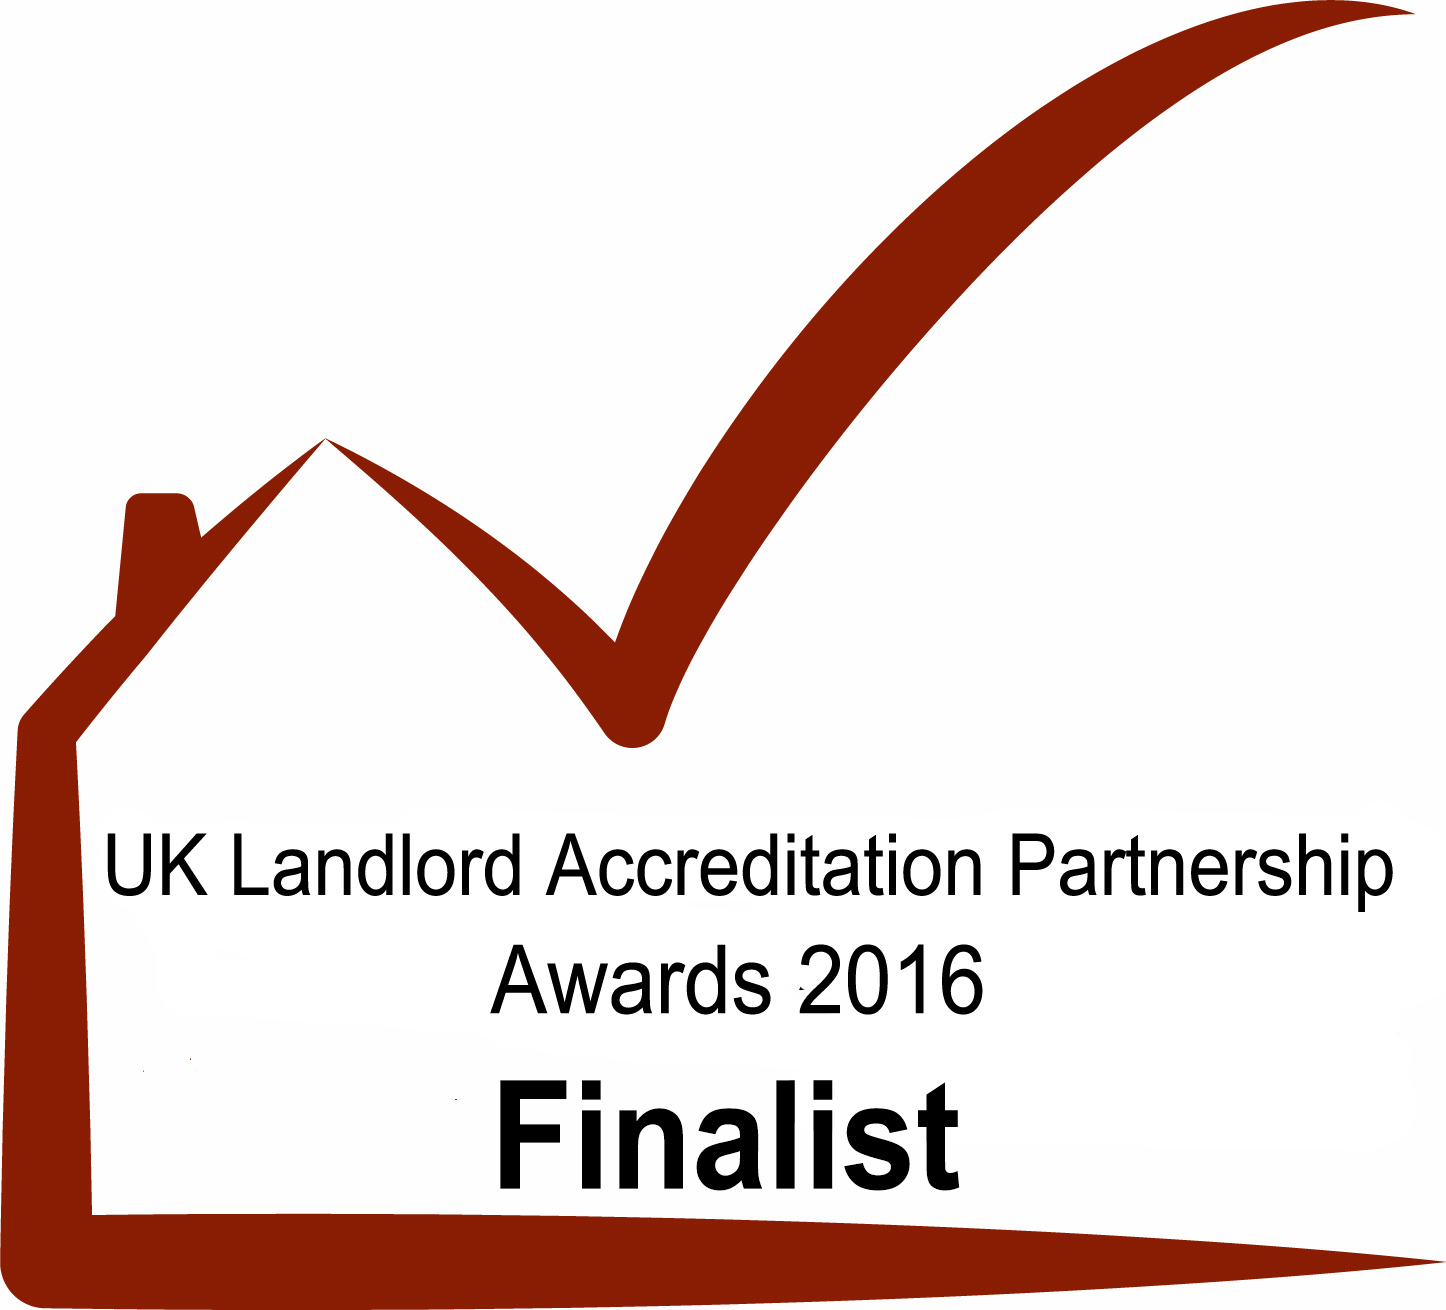 UK Landlord Accreditation Partnership Finalist logo